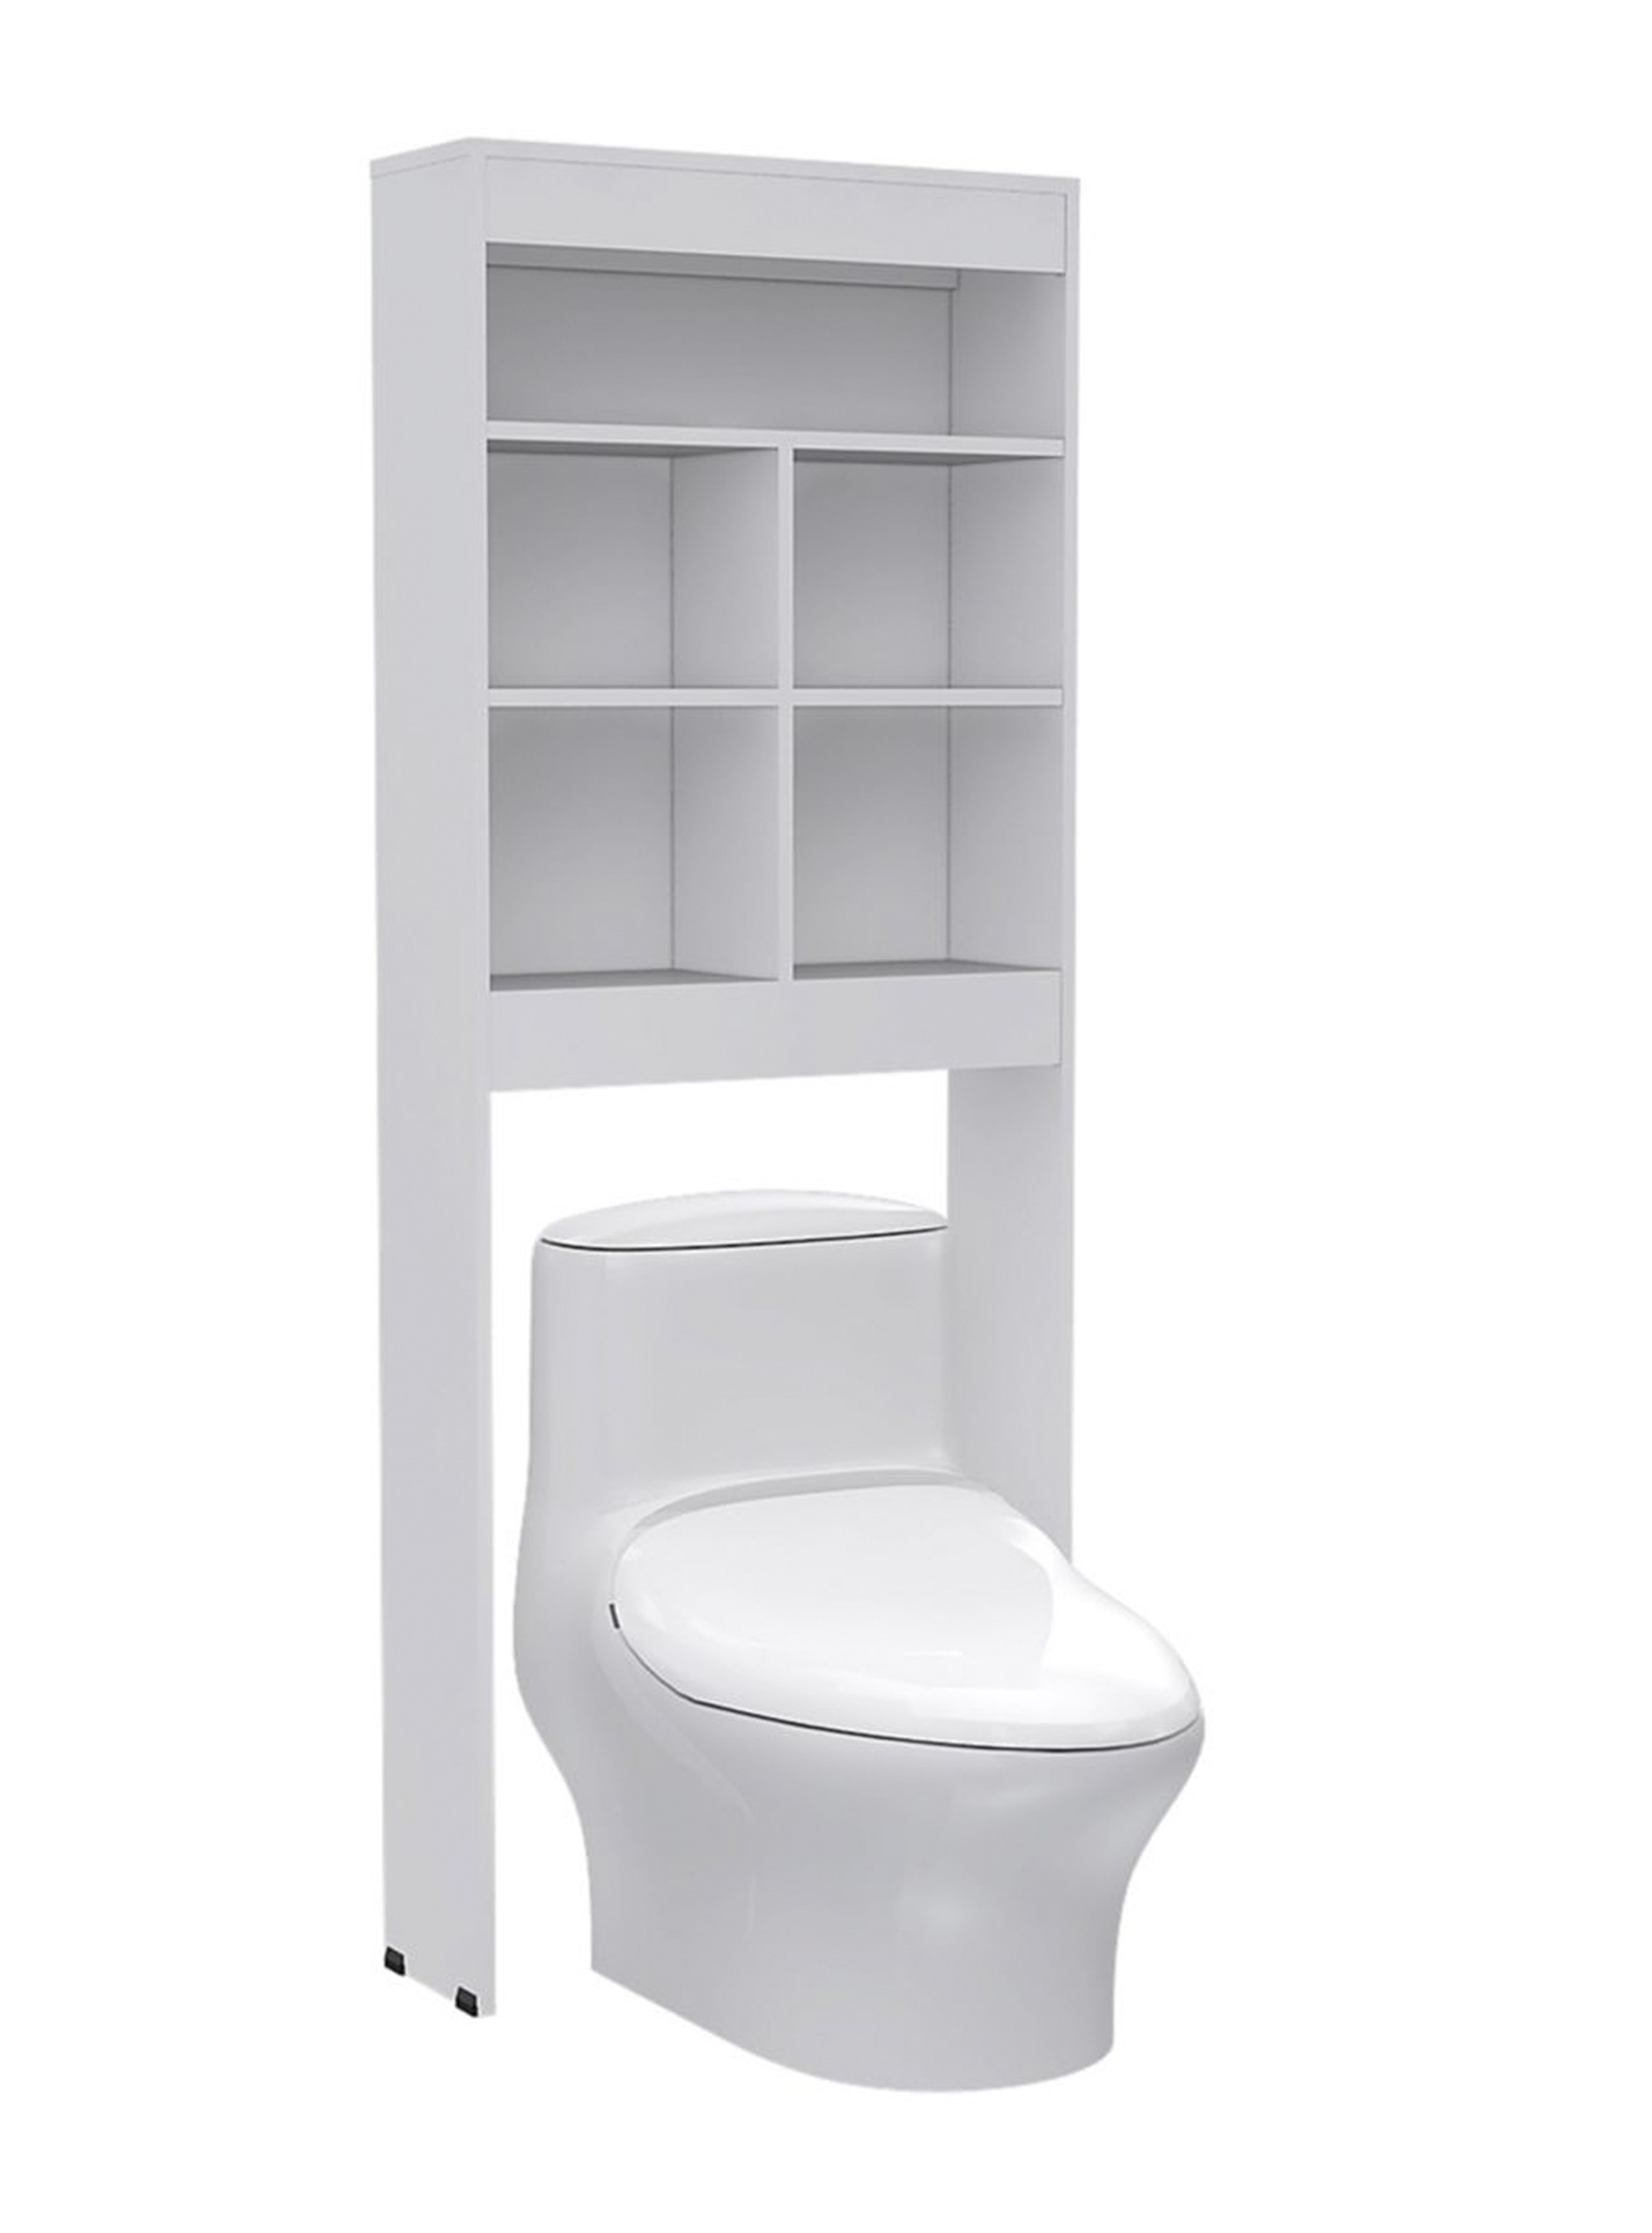 Mueble para baño 25x63x160 cm blanco